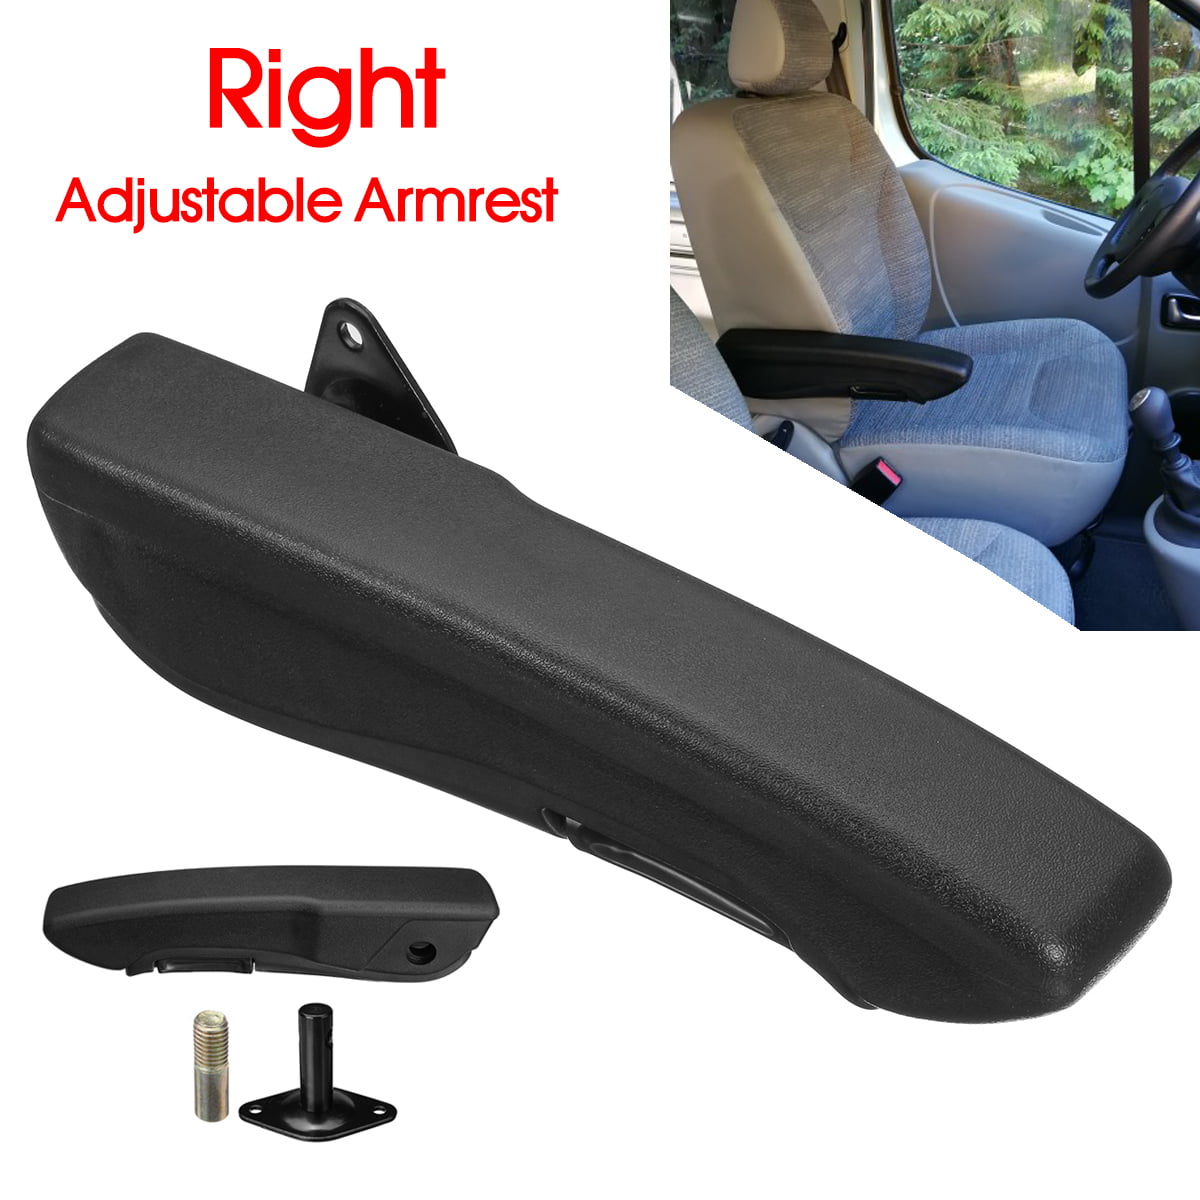 Universal Car Truck Minivan Adjustable Armrest Cover Right Side Black PU Leather